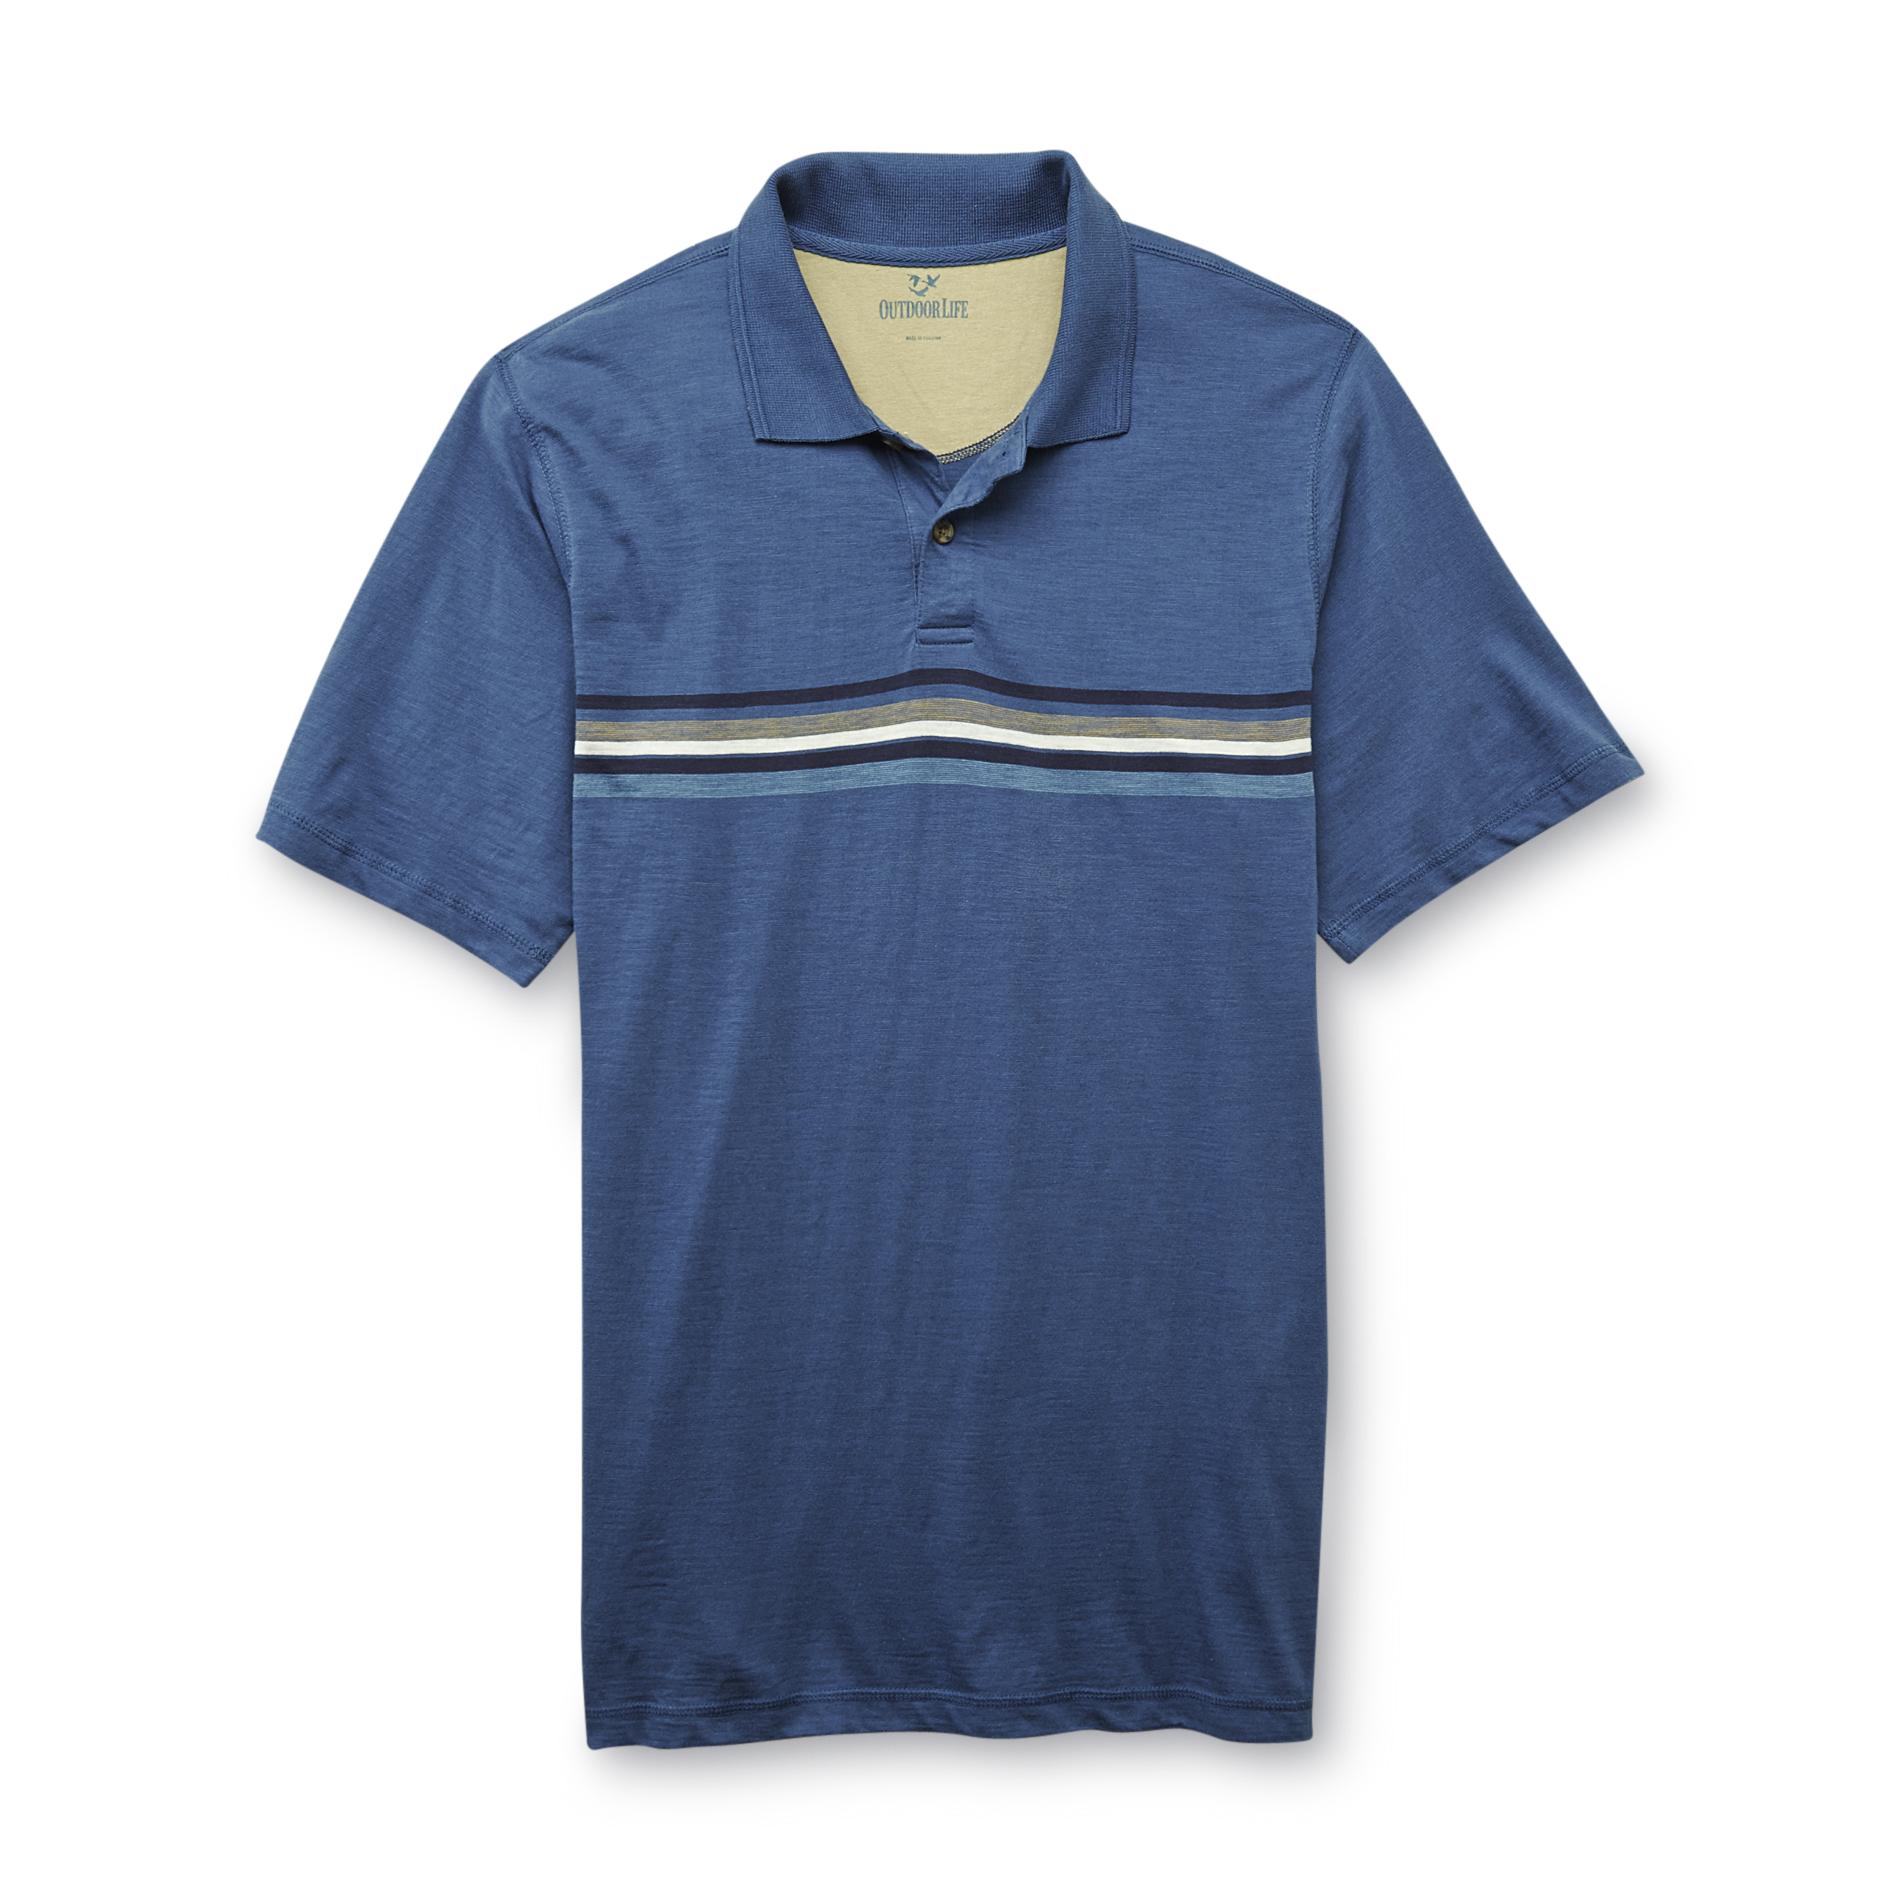 Outdoor Life Men's Big & Tall Jersey Polo Shirt - Striped